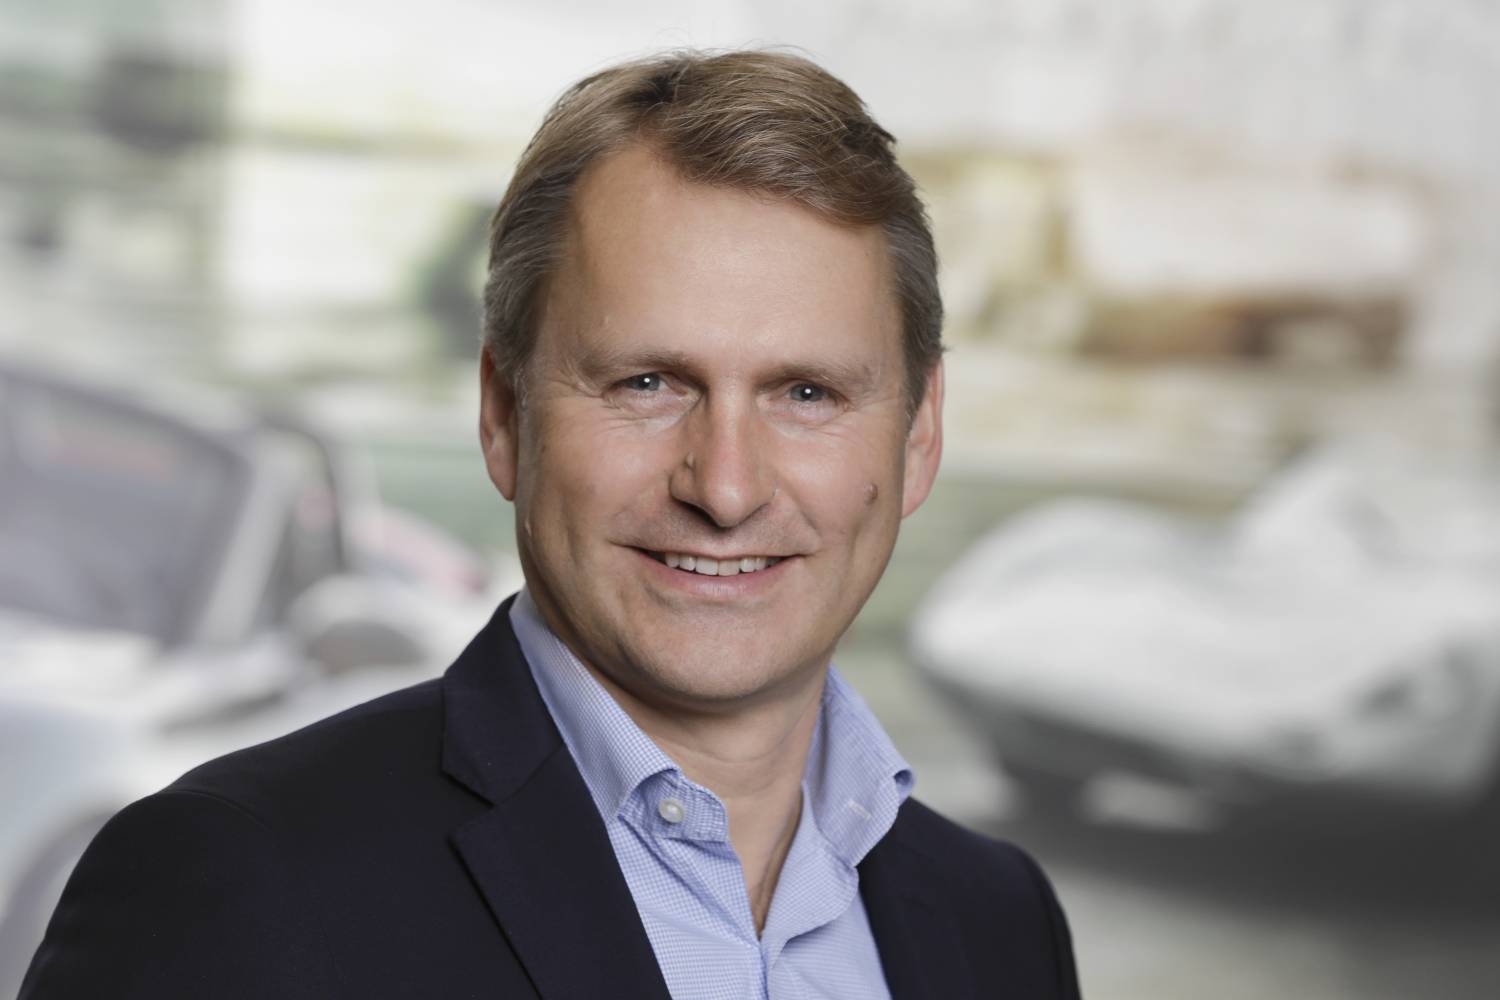 Mattias Ulbrich, Vice President Information Technology - CIO, Dr. Ing. h.c. F. Porsche AG